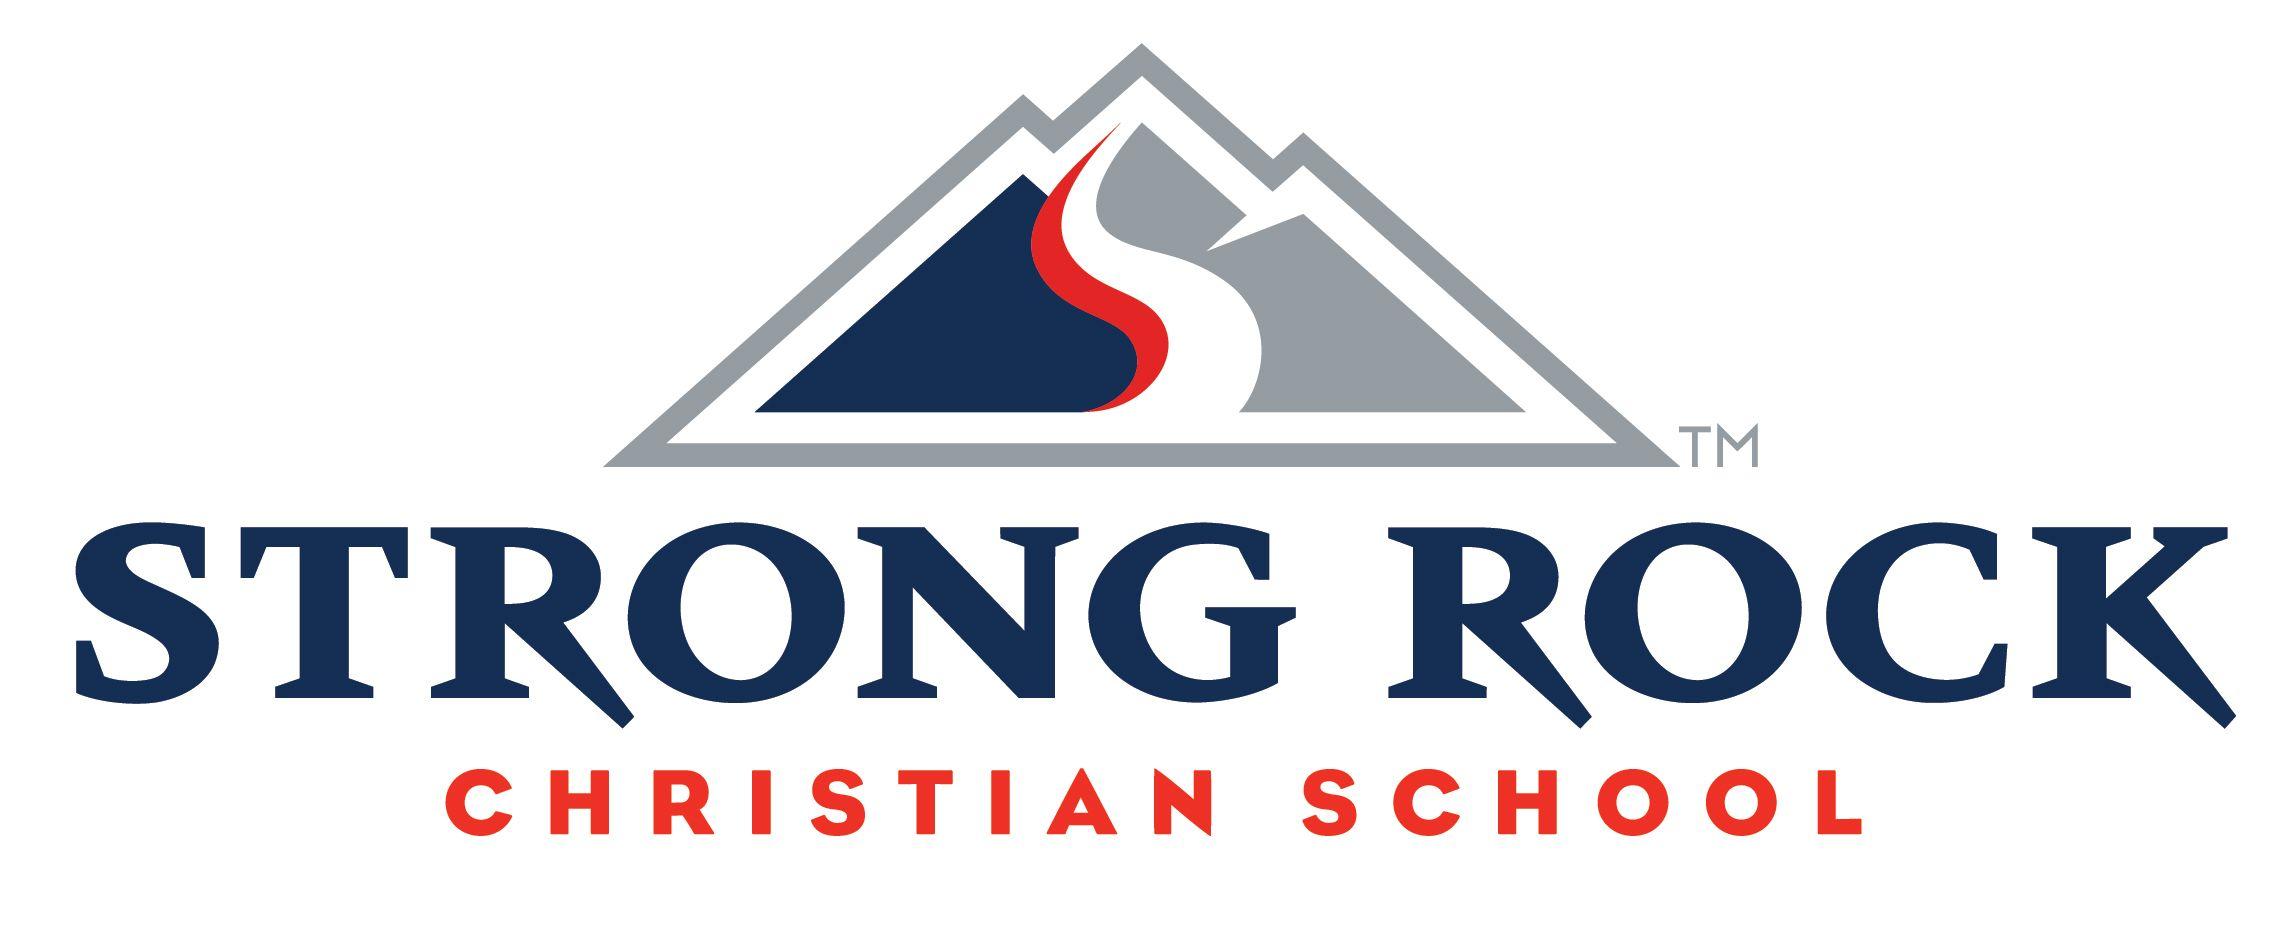 Strong Rock Logo - Strong Rock Christian School - KNOWAtlanta